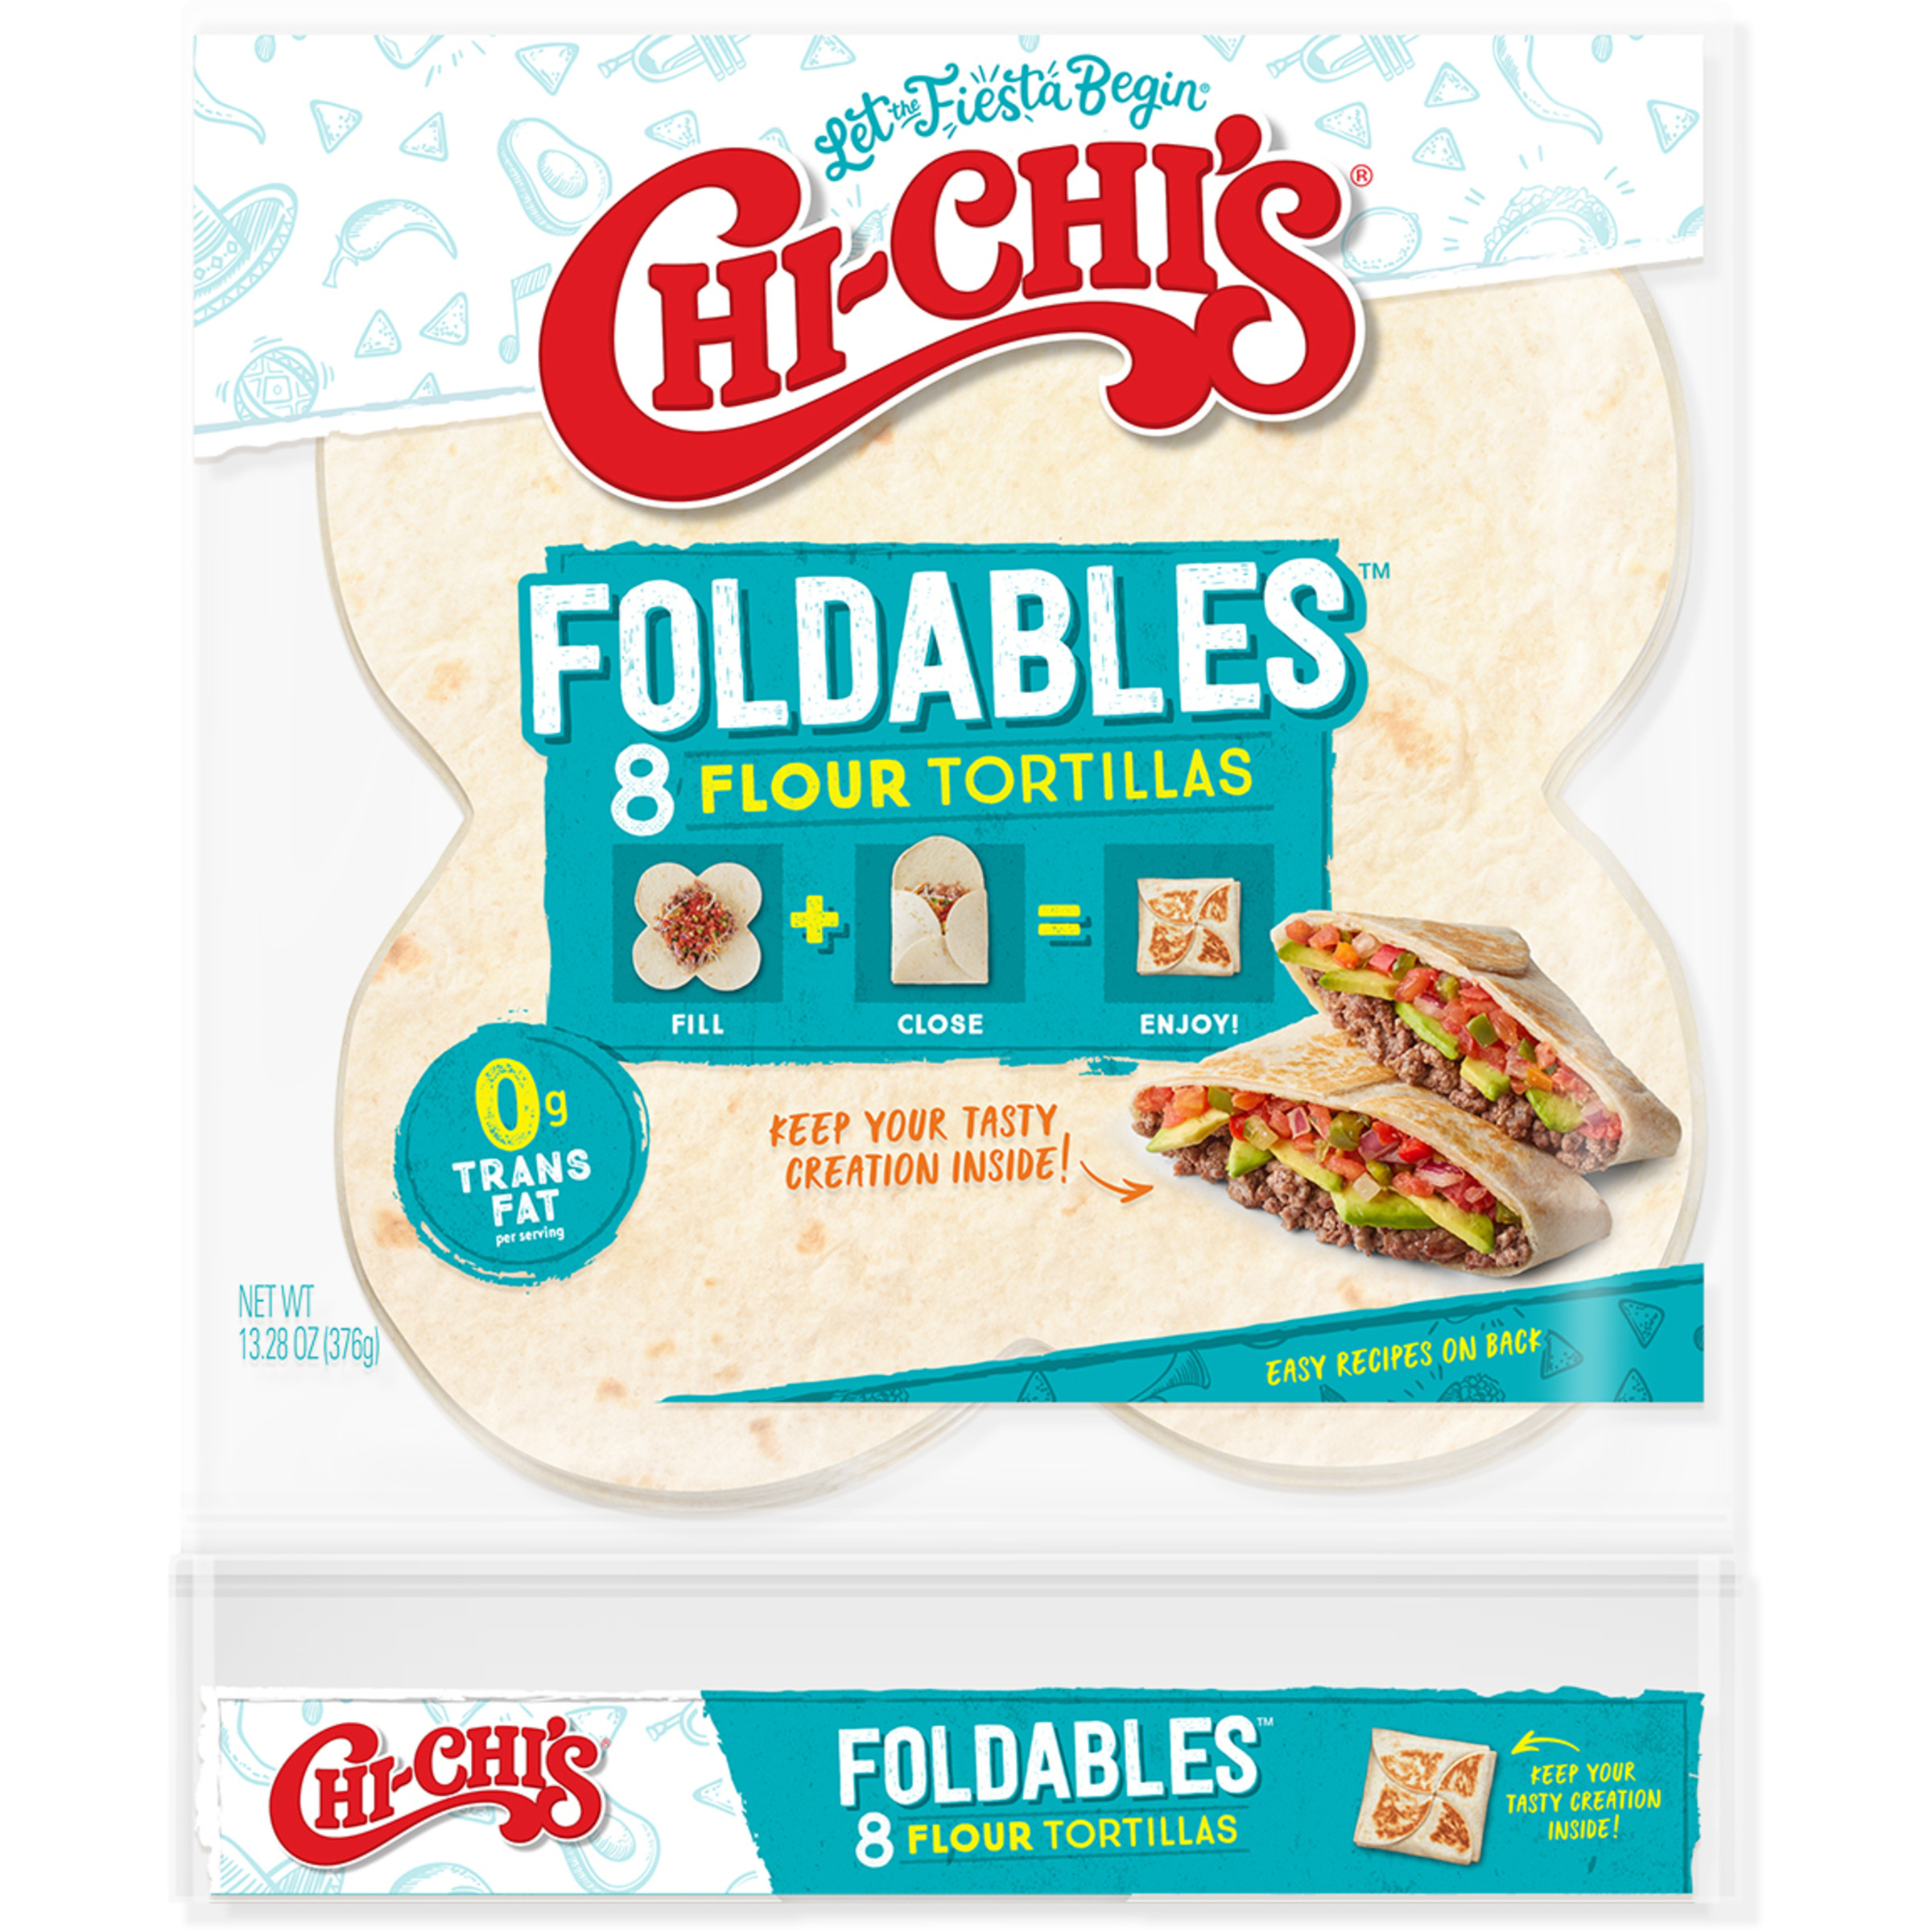 CHI-CHI'S  FOLDABLES Tortillas, 13.28 oz Regular - image 1 of 3